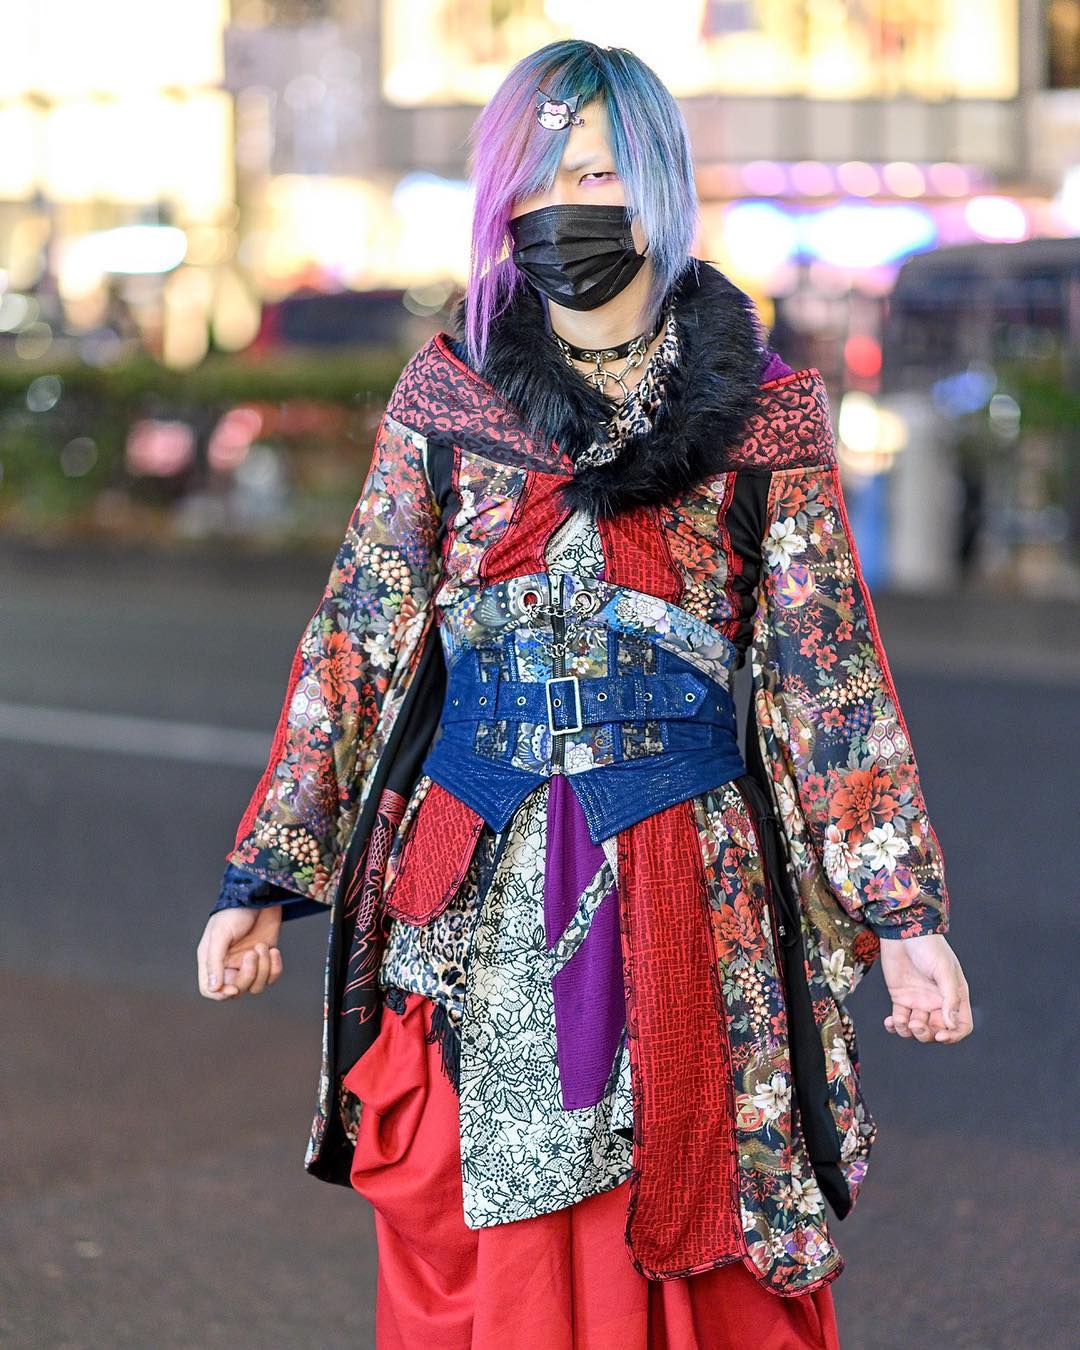 Tokyo Fashion: Desuko on the street in Harajuku wearing a colorful ...